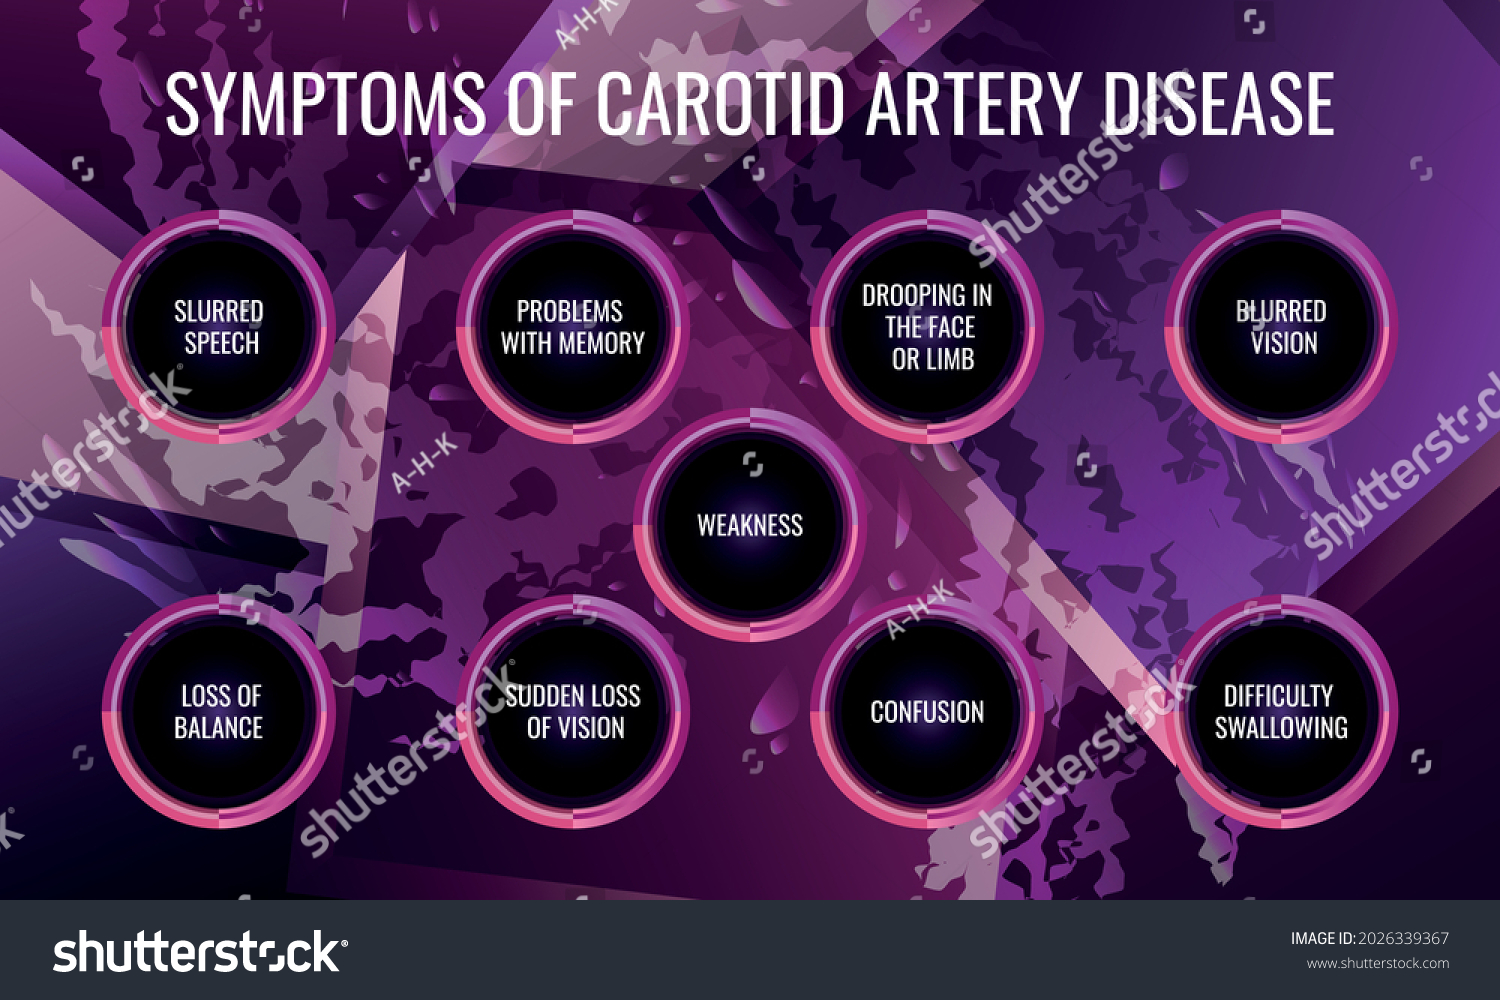 symptoms of Carotid artery disease. Vector illustration for medical journal or brochure. #2026339367